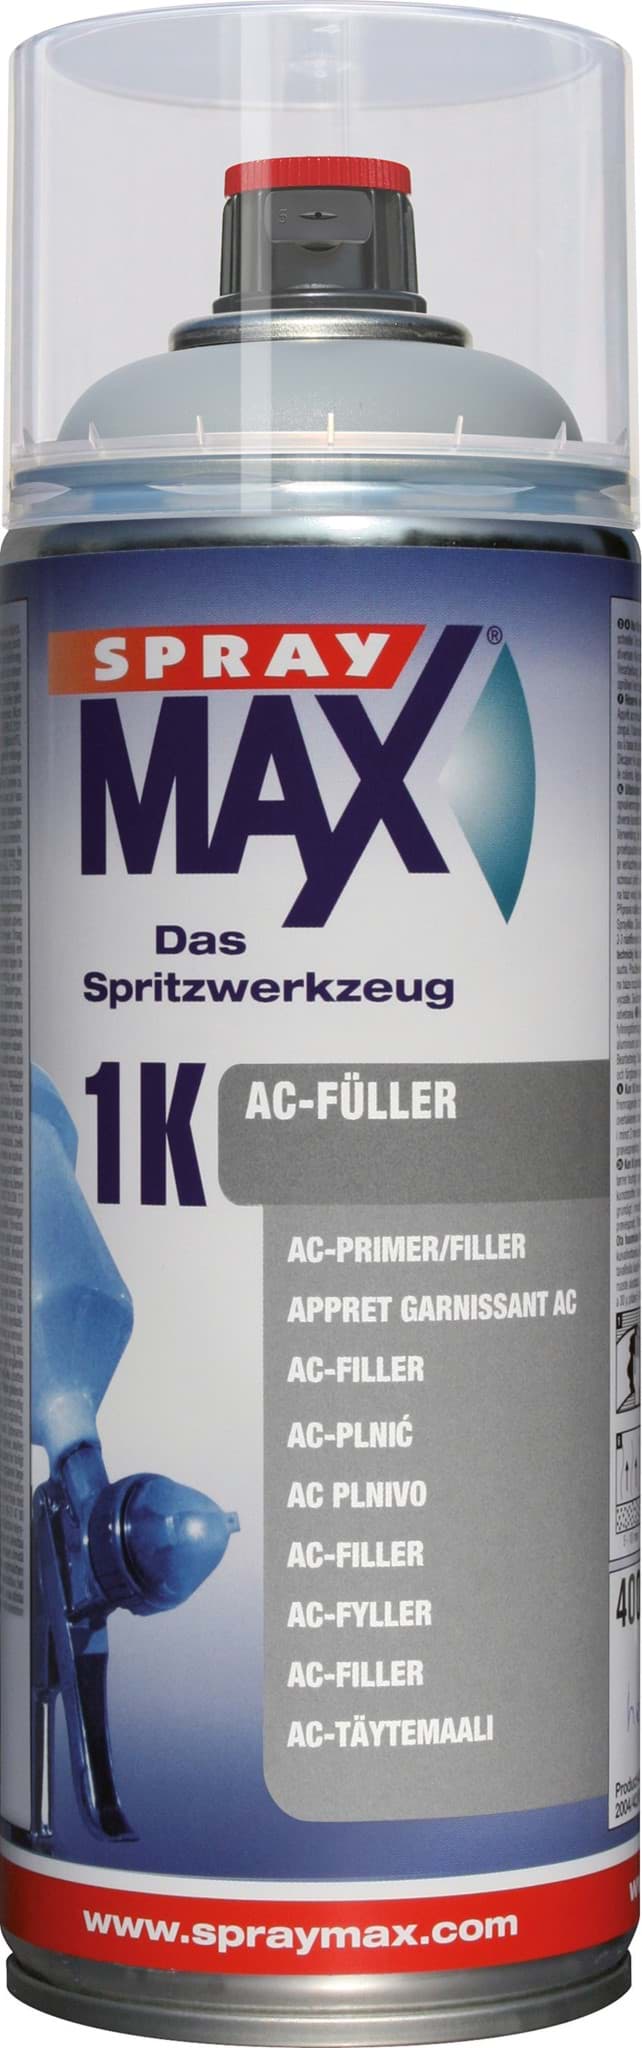 SprayMax 1K AC-Füller hellgrau Spray 400ml resmi